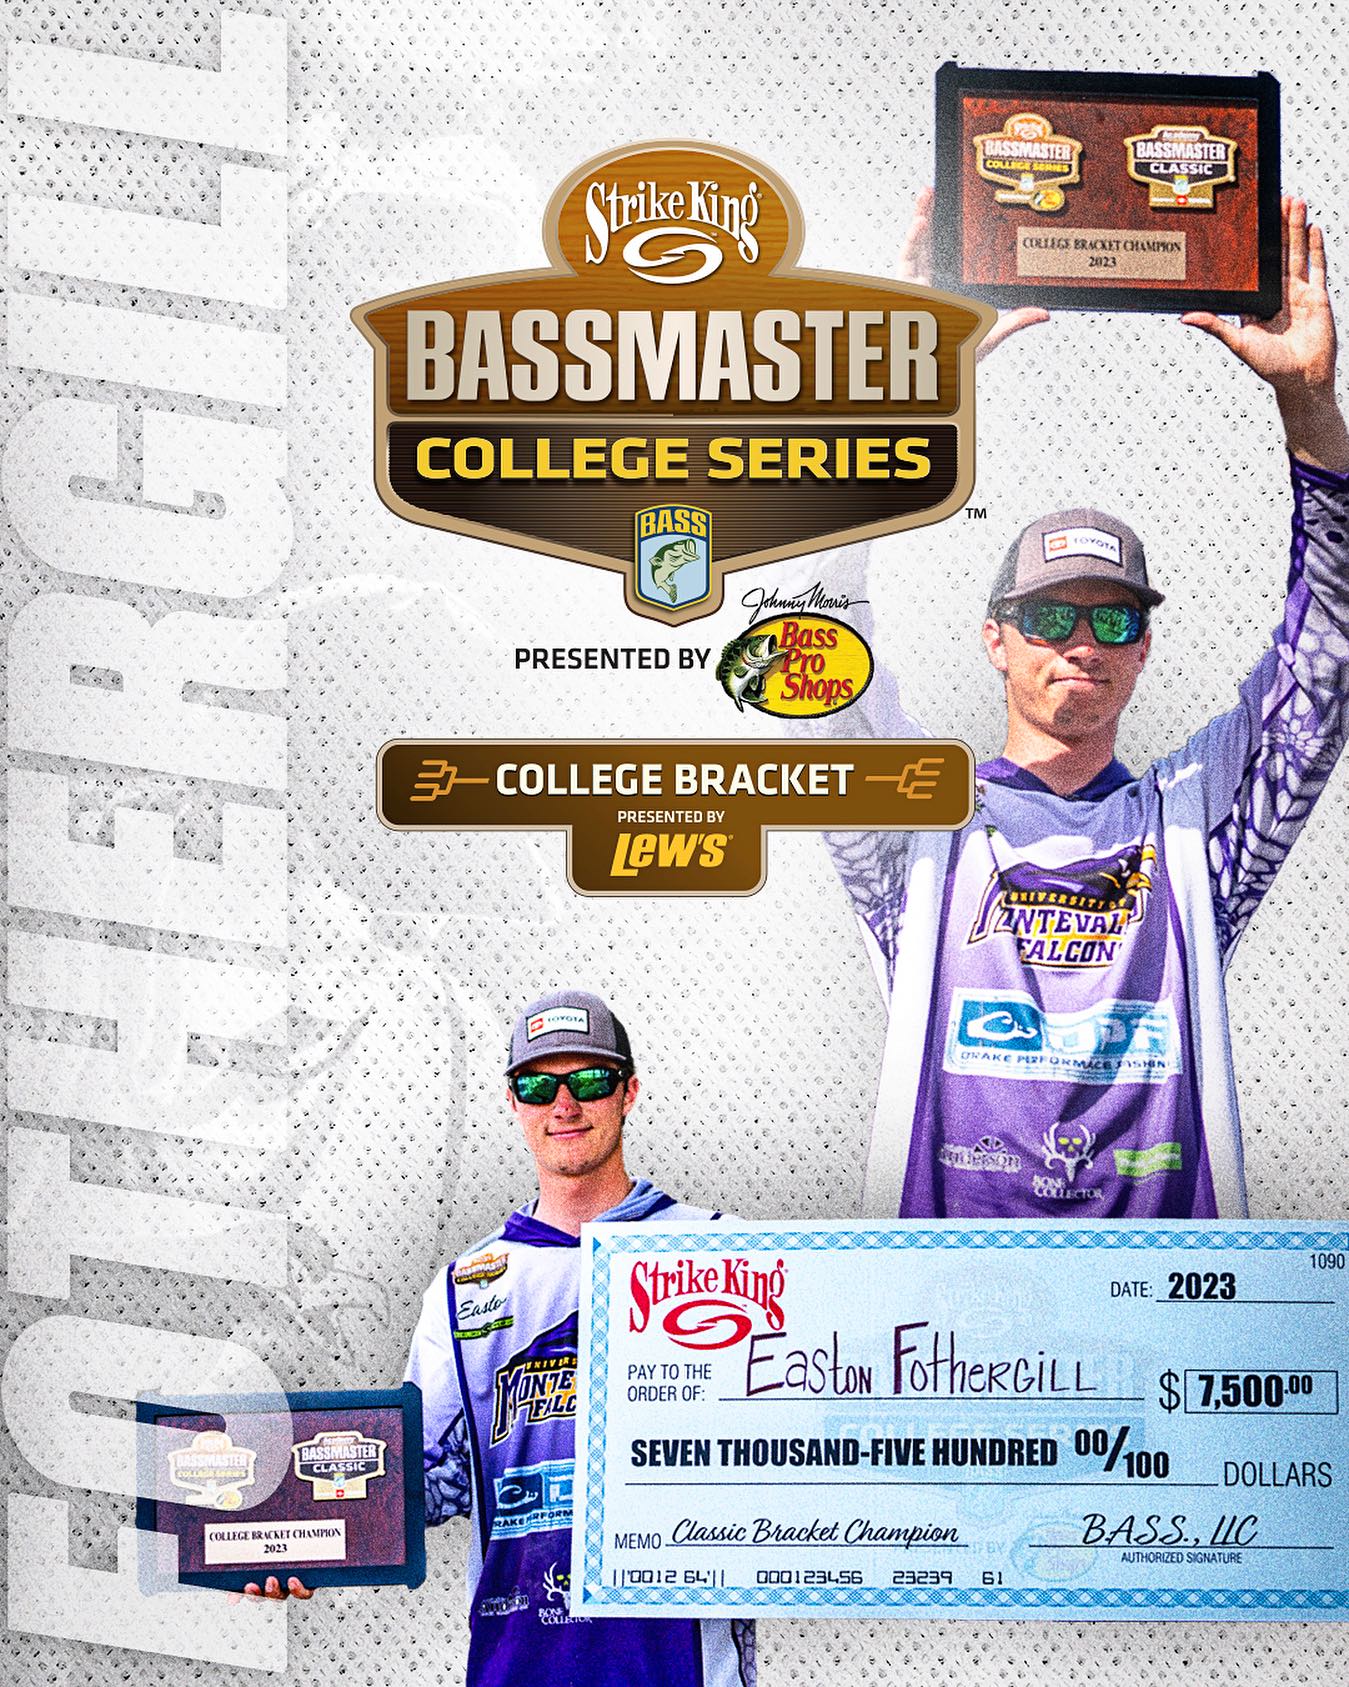 Bass Fishing Club Wins Bassmaster College Classic Title